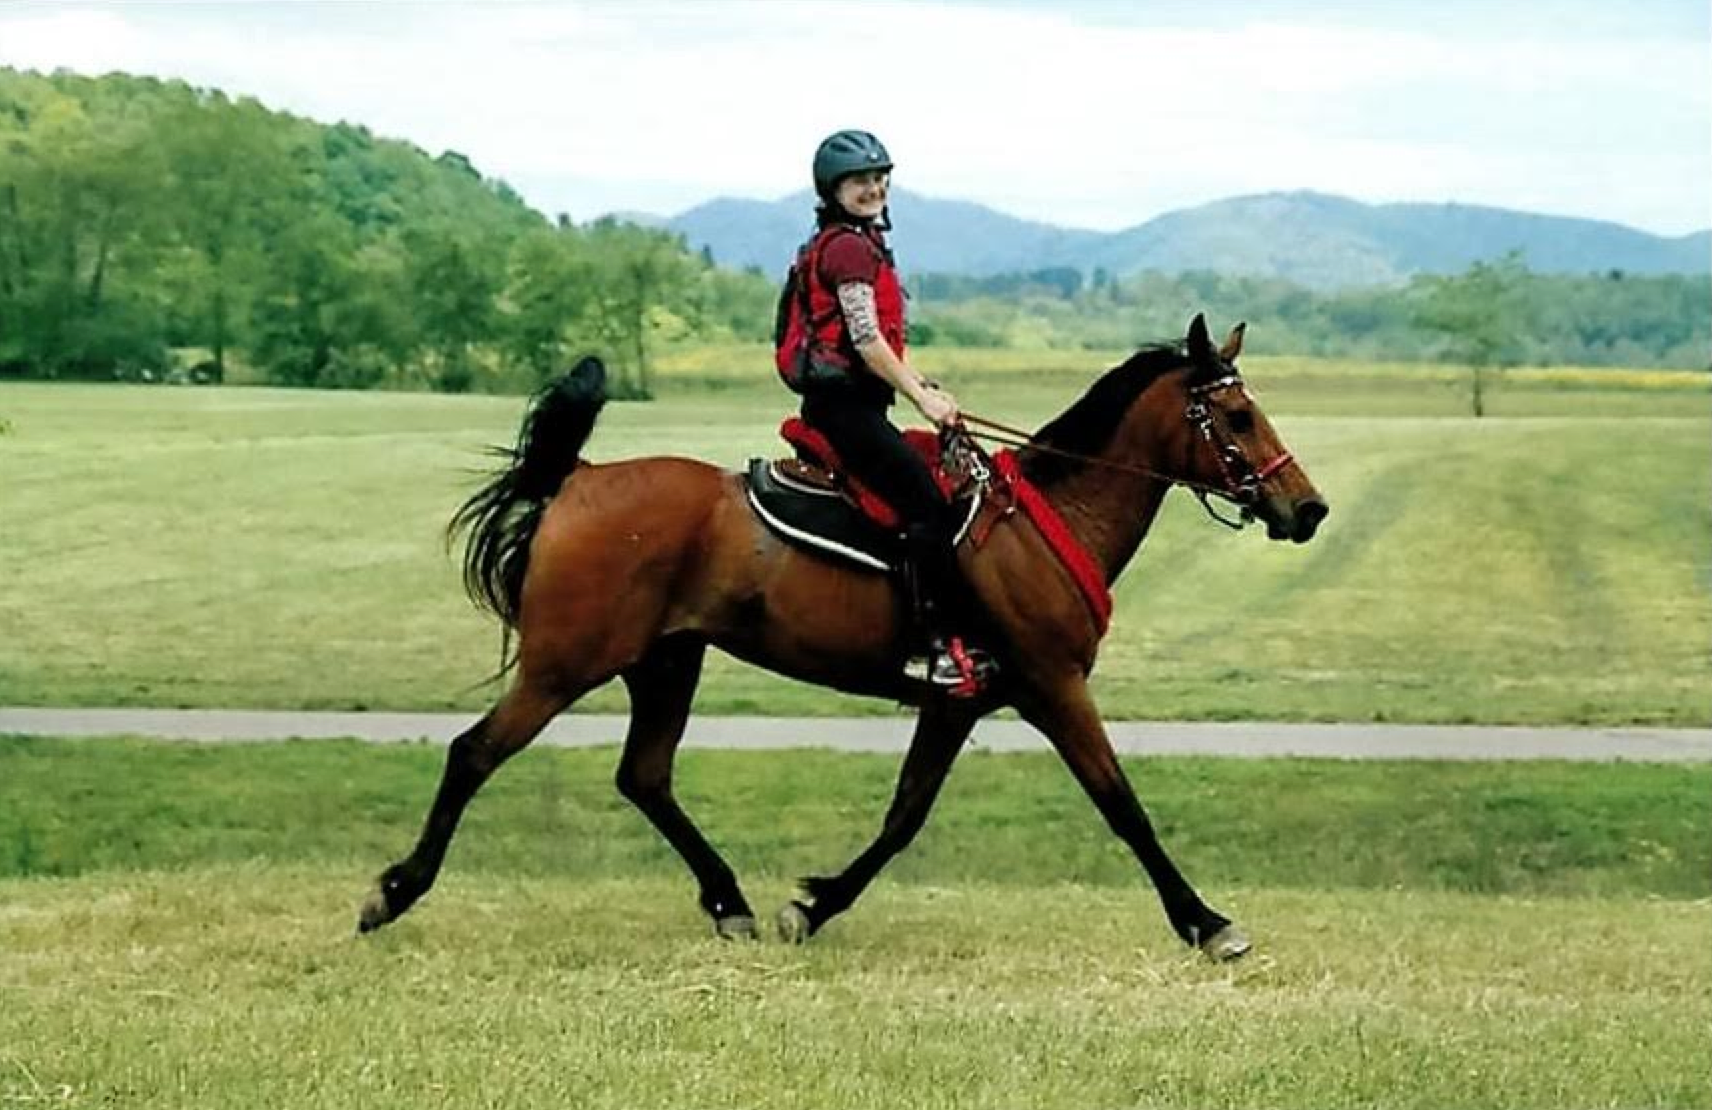 Full Sheepskin Endurance Round Skirt Saddle Pad - Customer Review Sara Borkosky